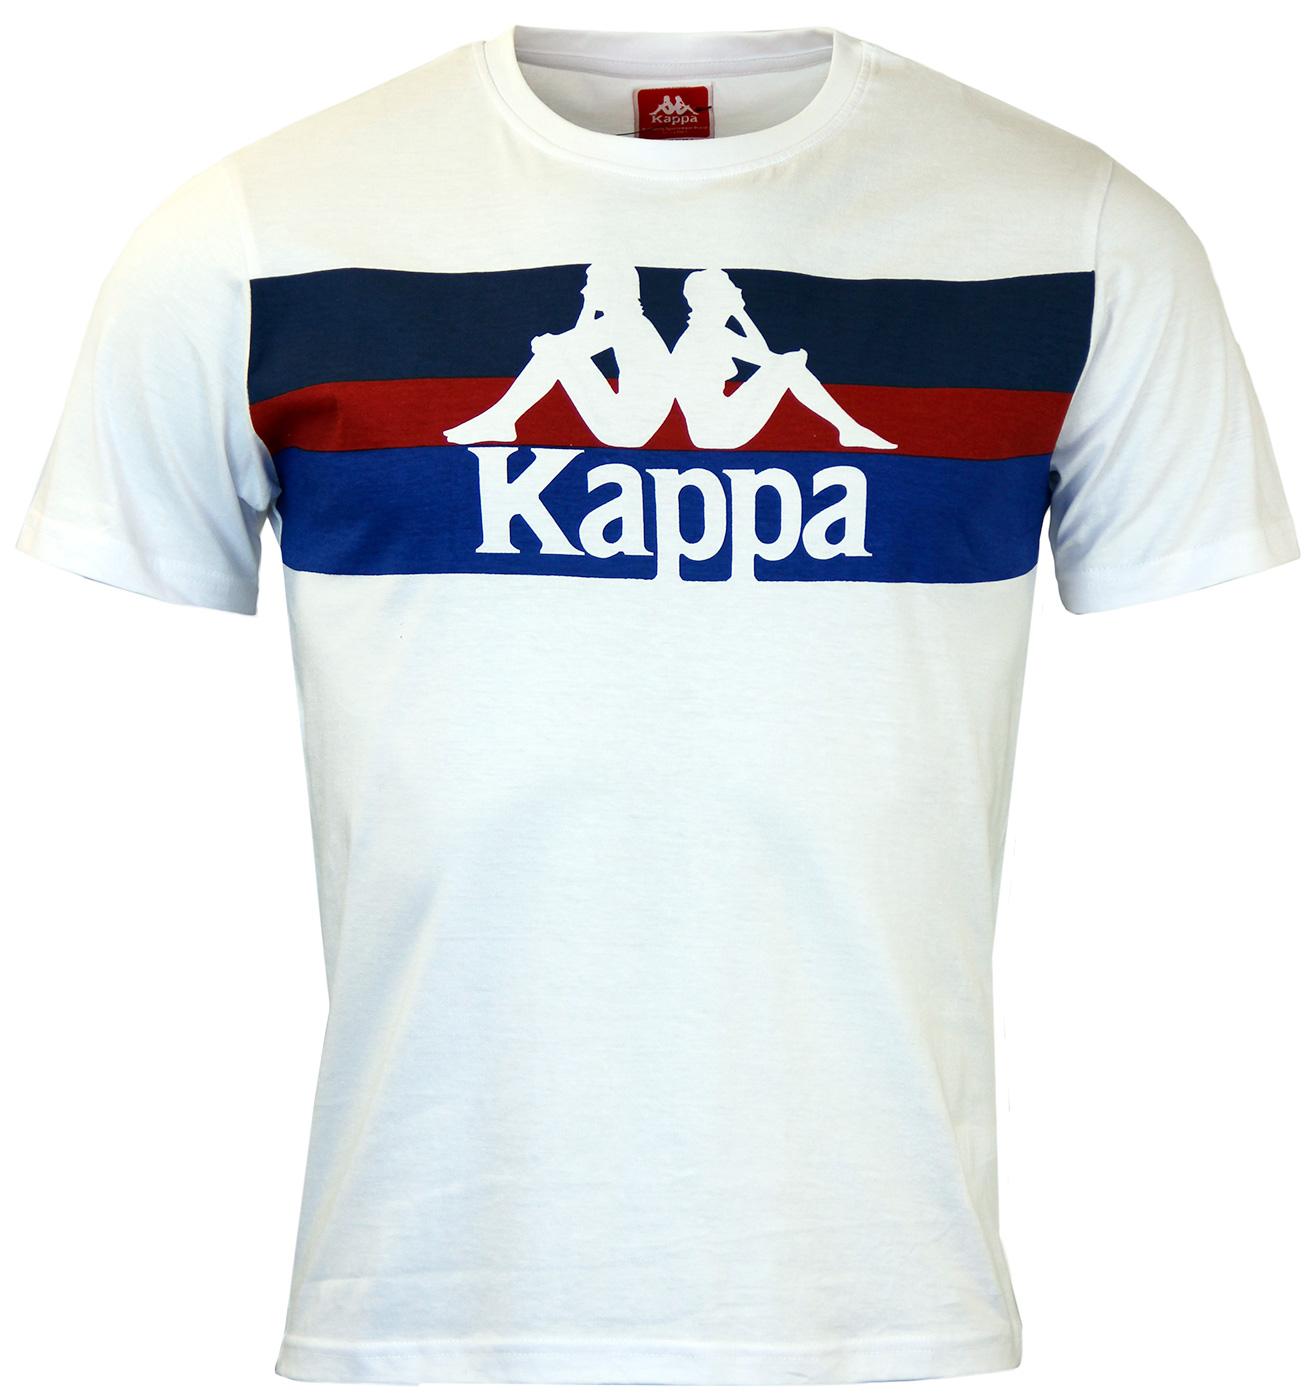 KAPPA Skippa Retro 1980s Casuals Block Stripe T-Shirt in White